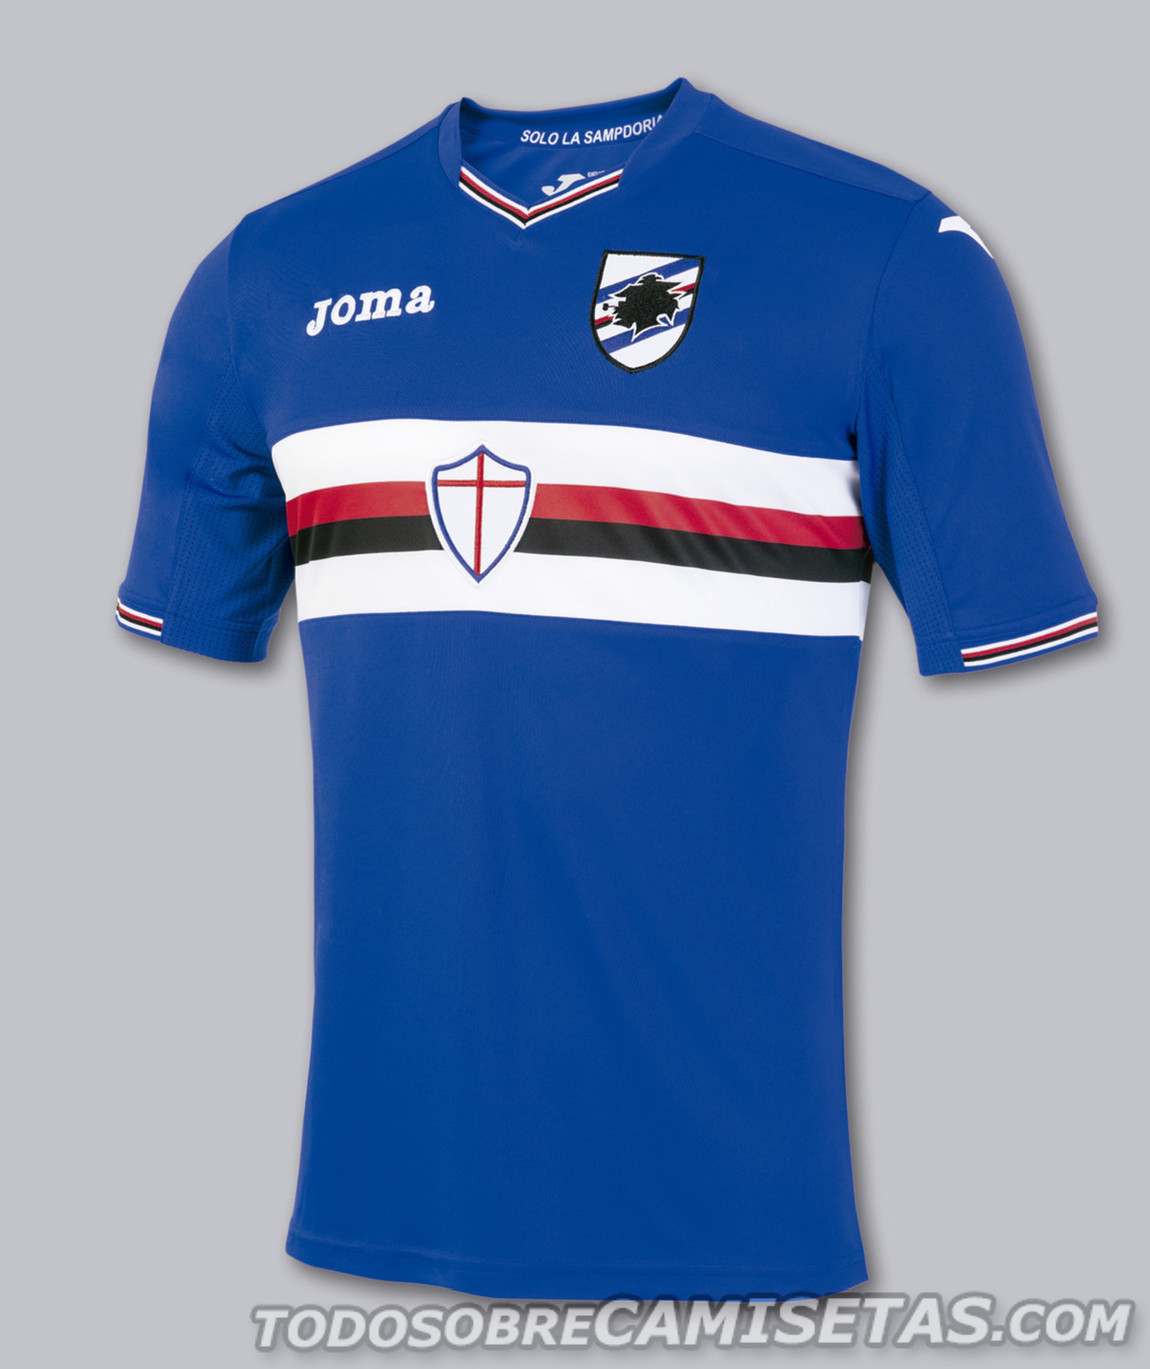 U.C. Sampdoria Joma 2016-17 Kits Todo Sobre Camisetas